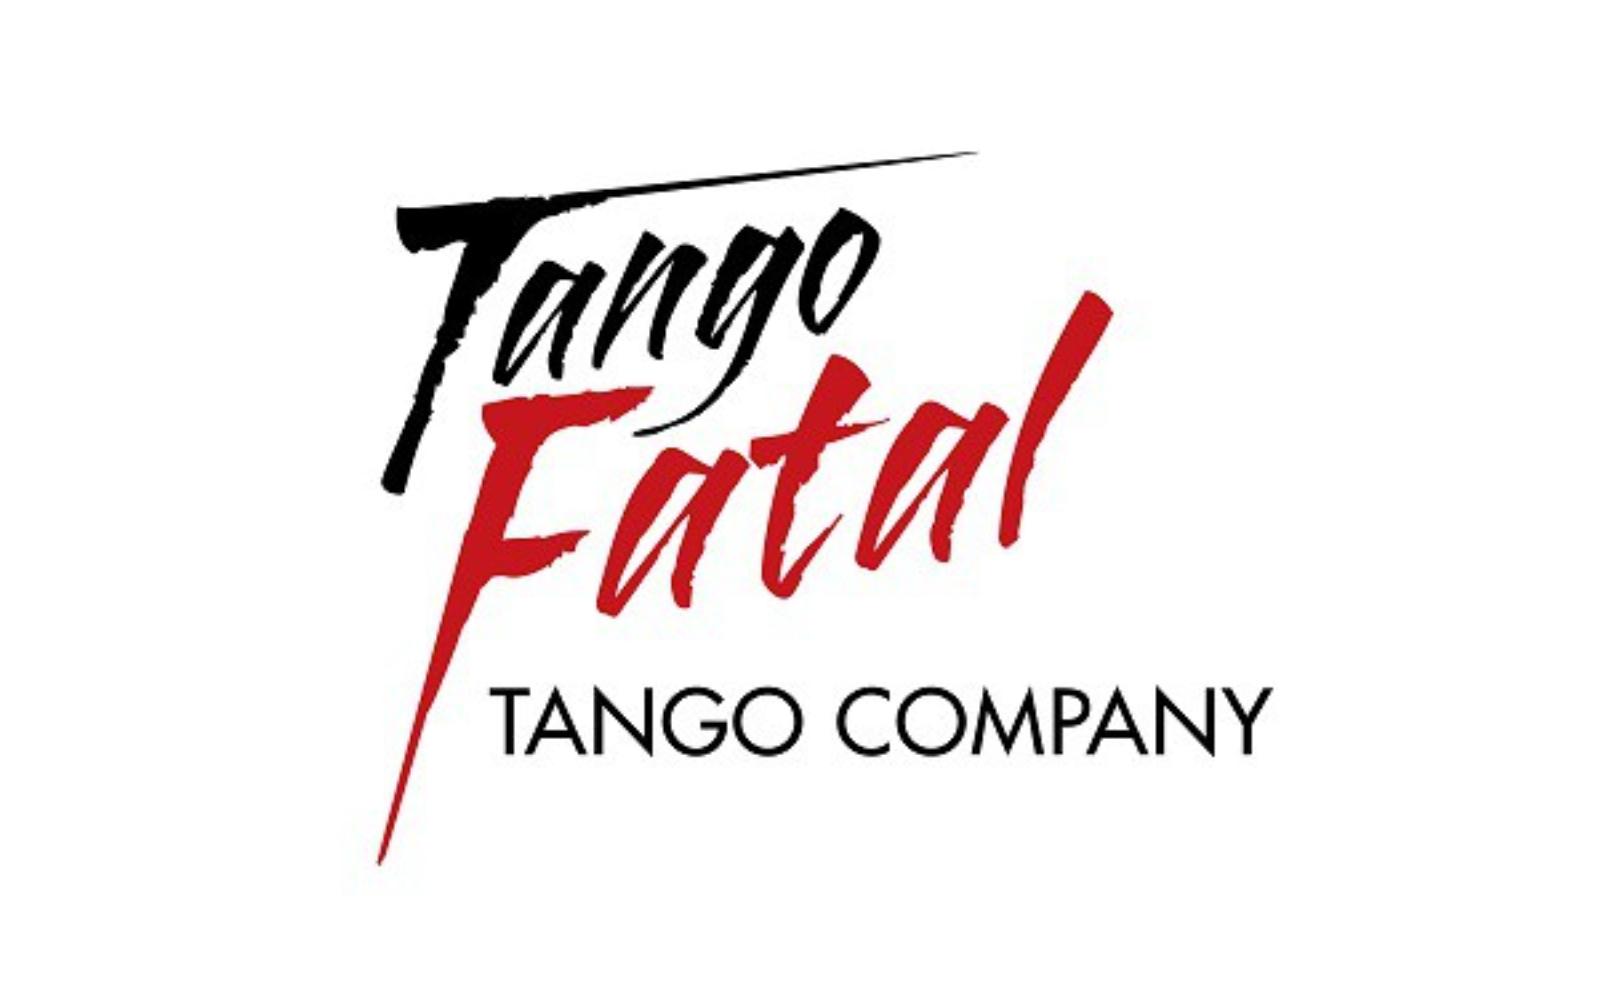 Tango Fatal